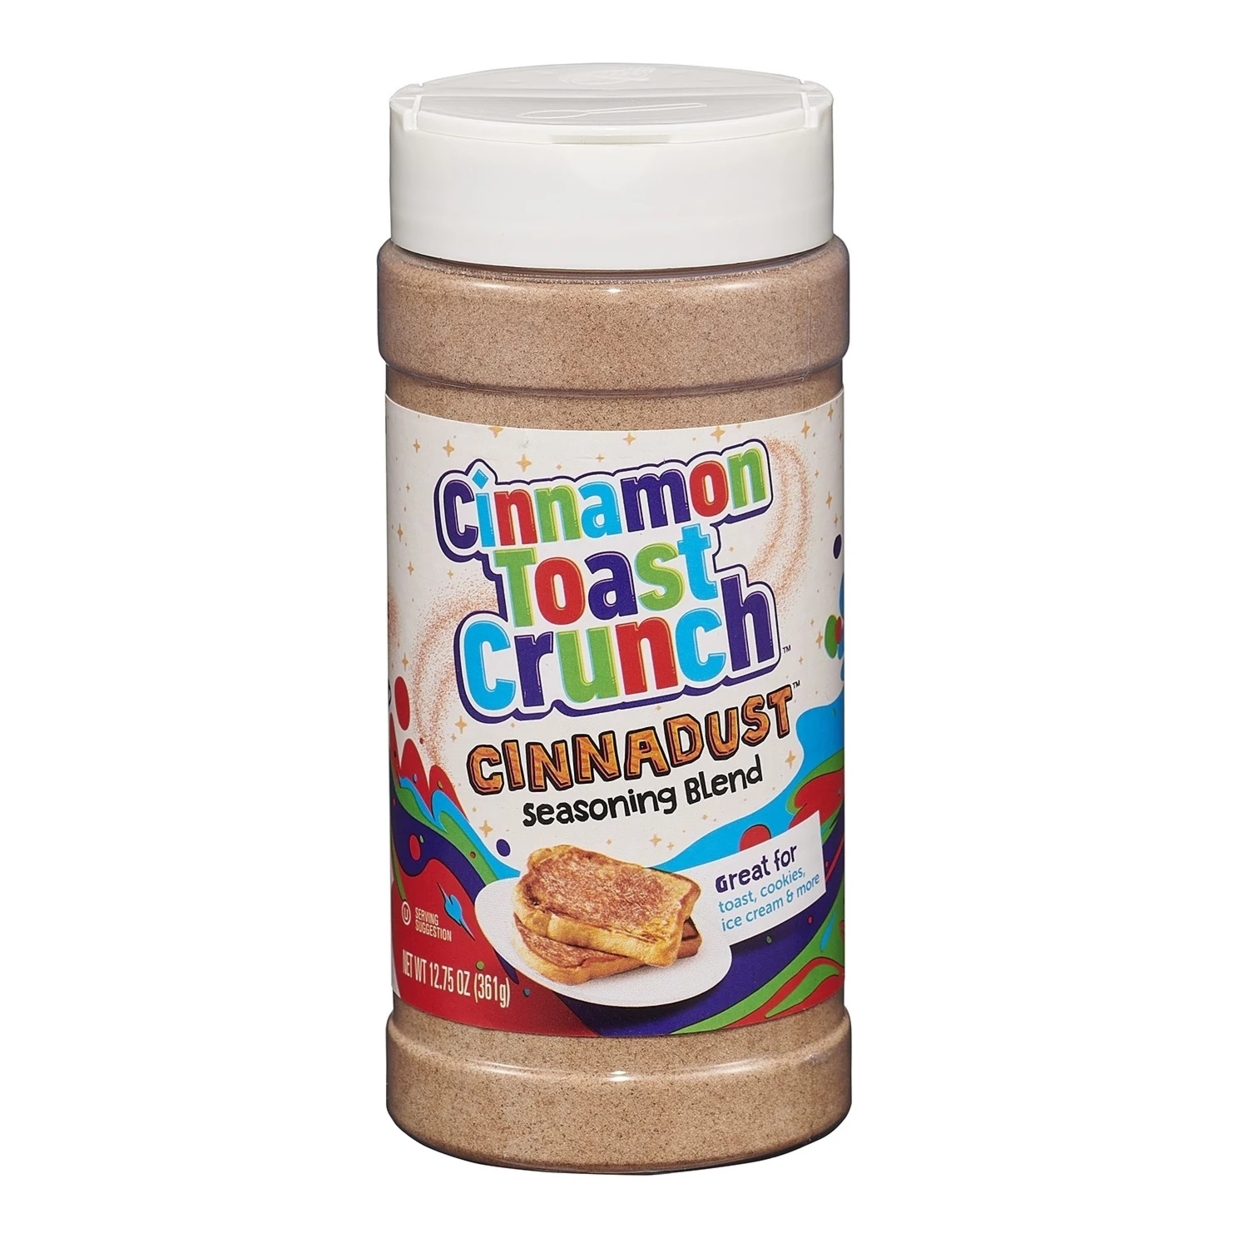 Cinnamon Toast Crunch Cinnadust Seasoning Blend (12.75 Ounce)